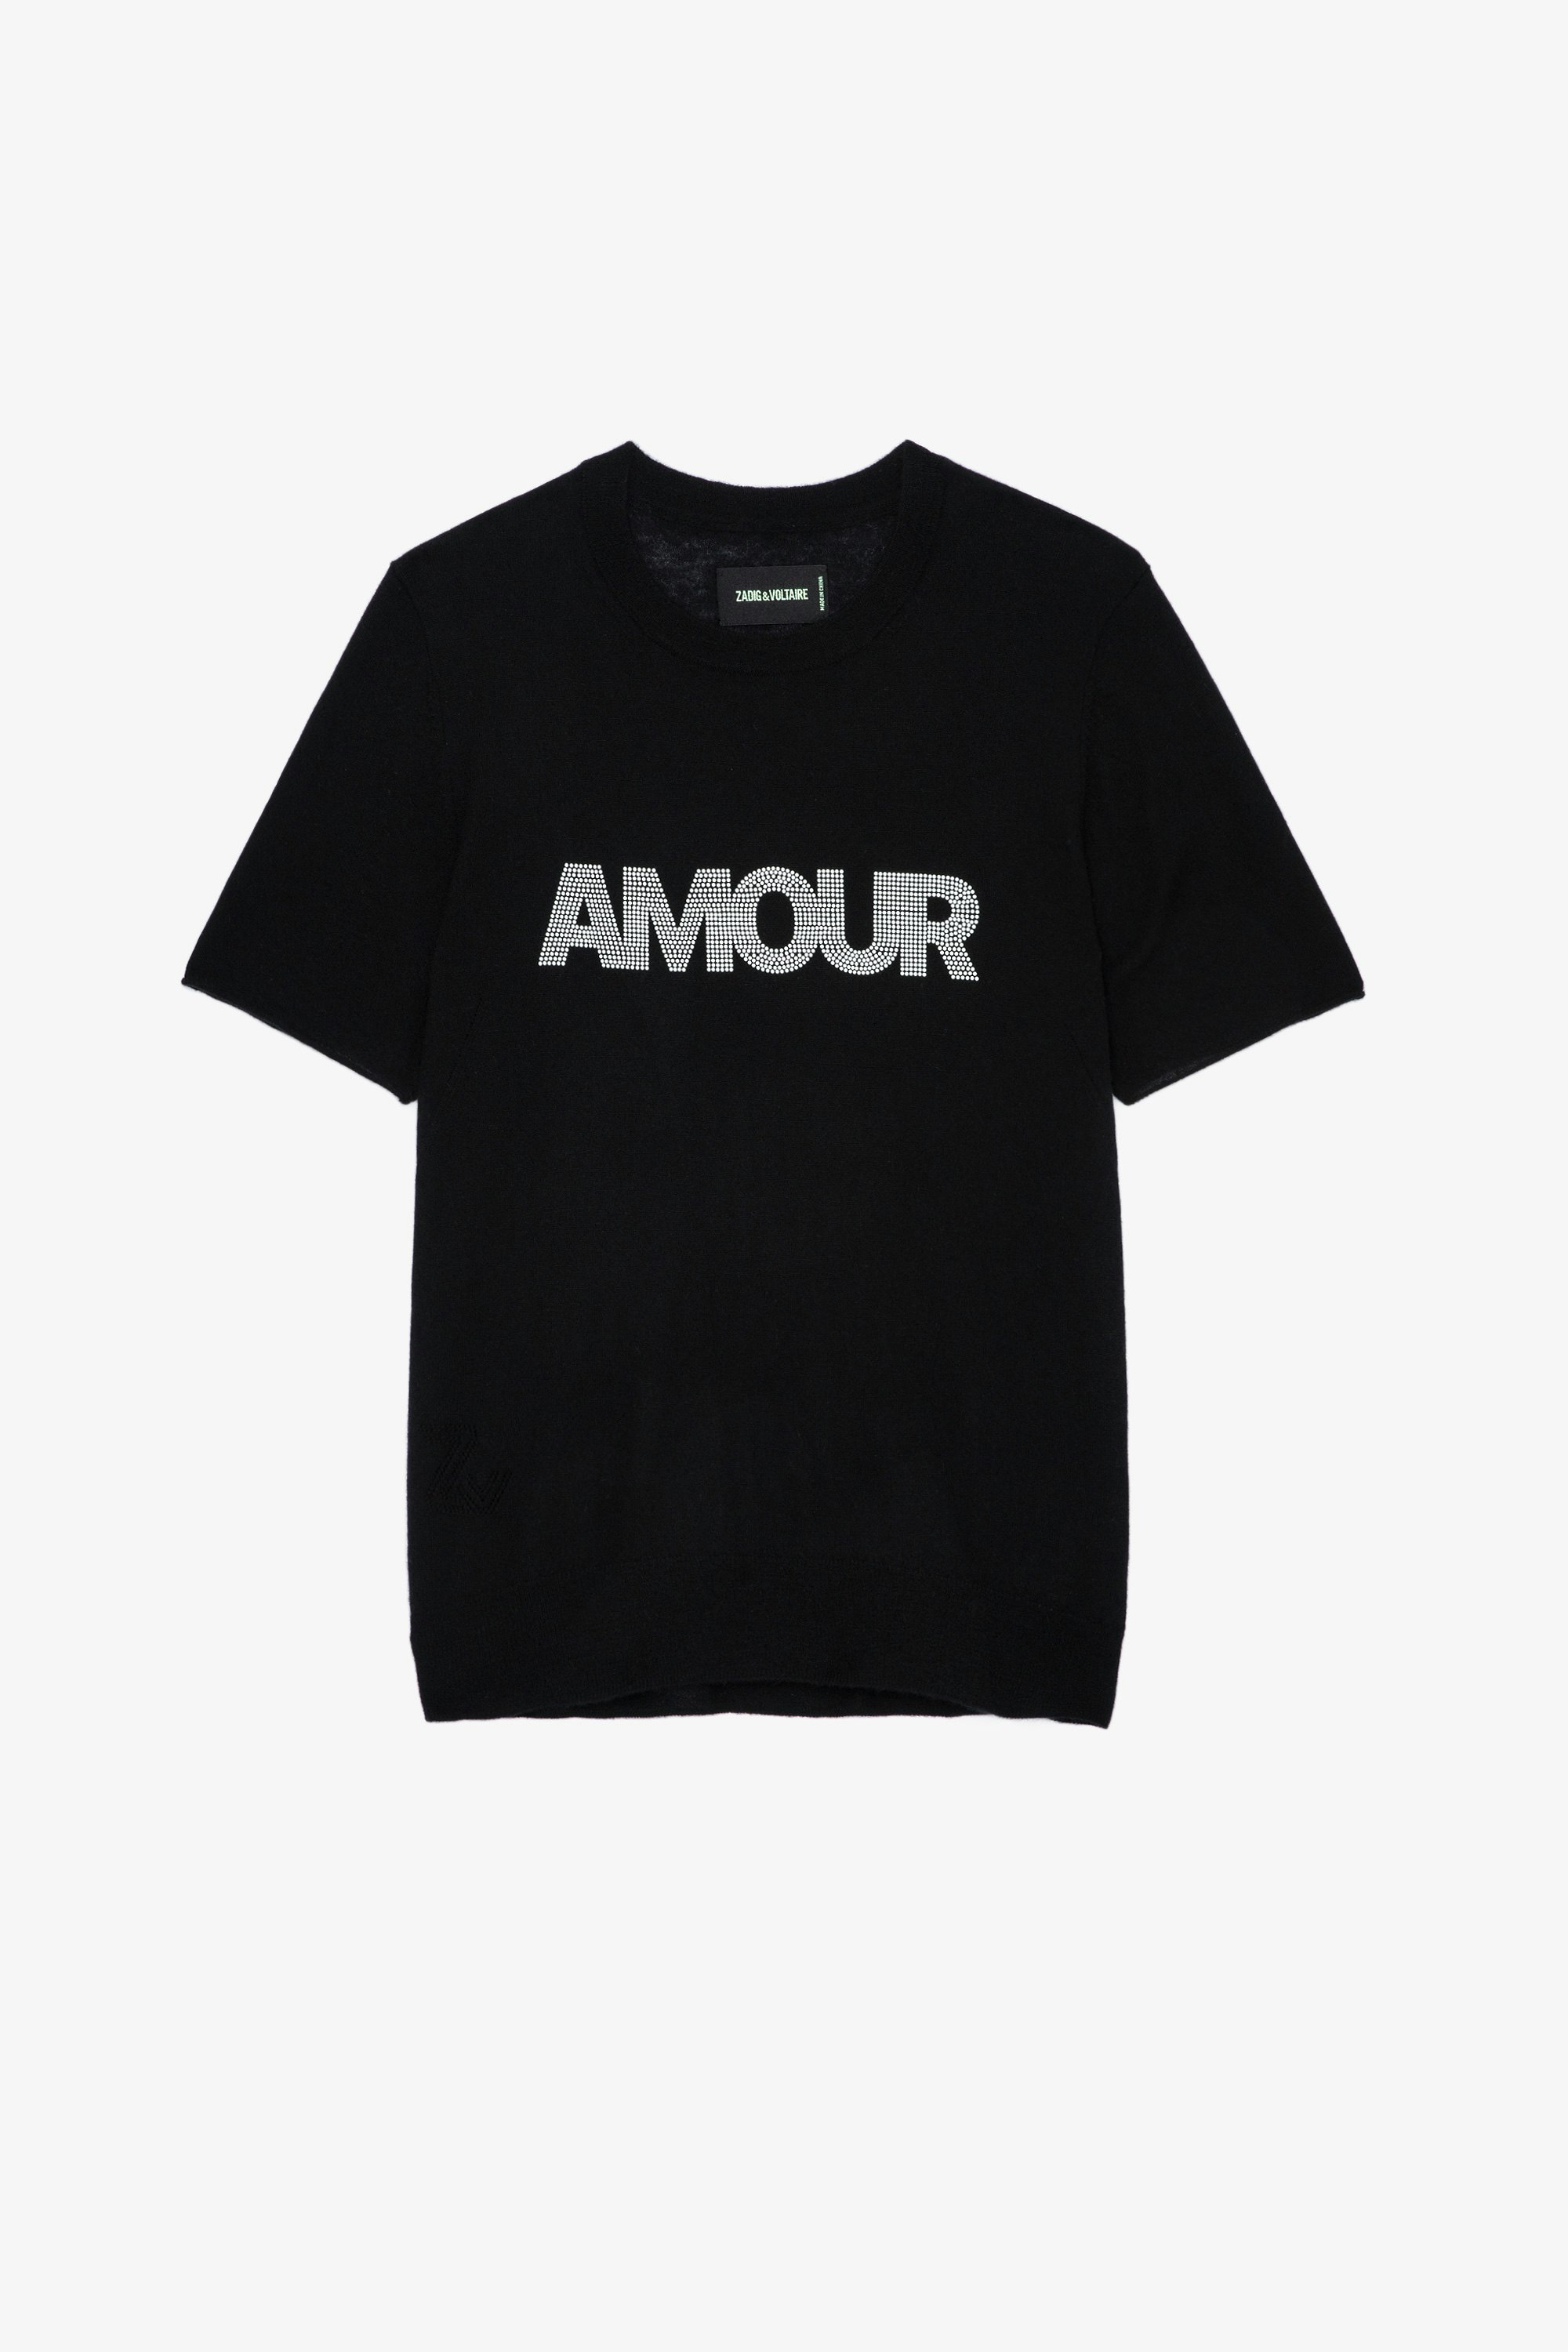 Ida Cashmere Jumper Women’s black cashmere short-sleeved jumper with “Amour” slogan